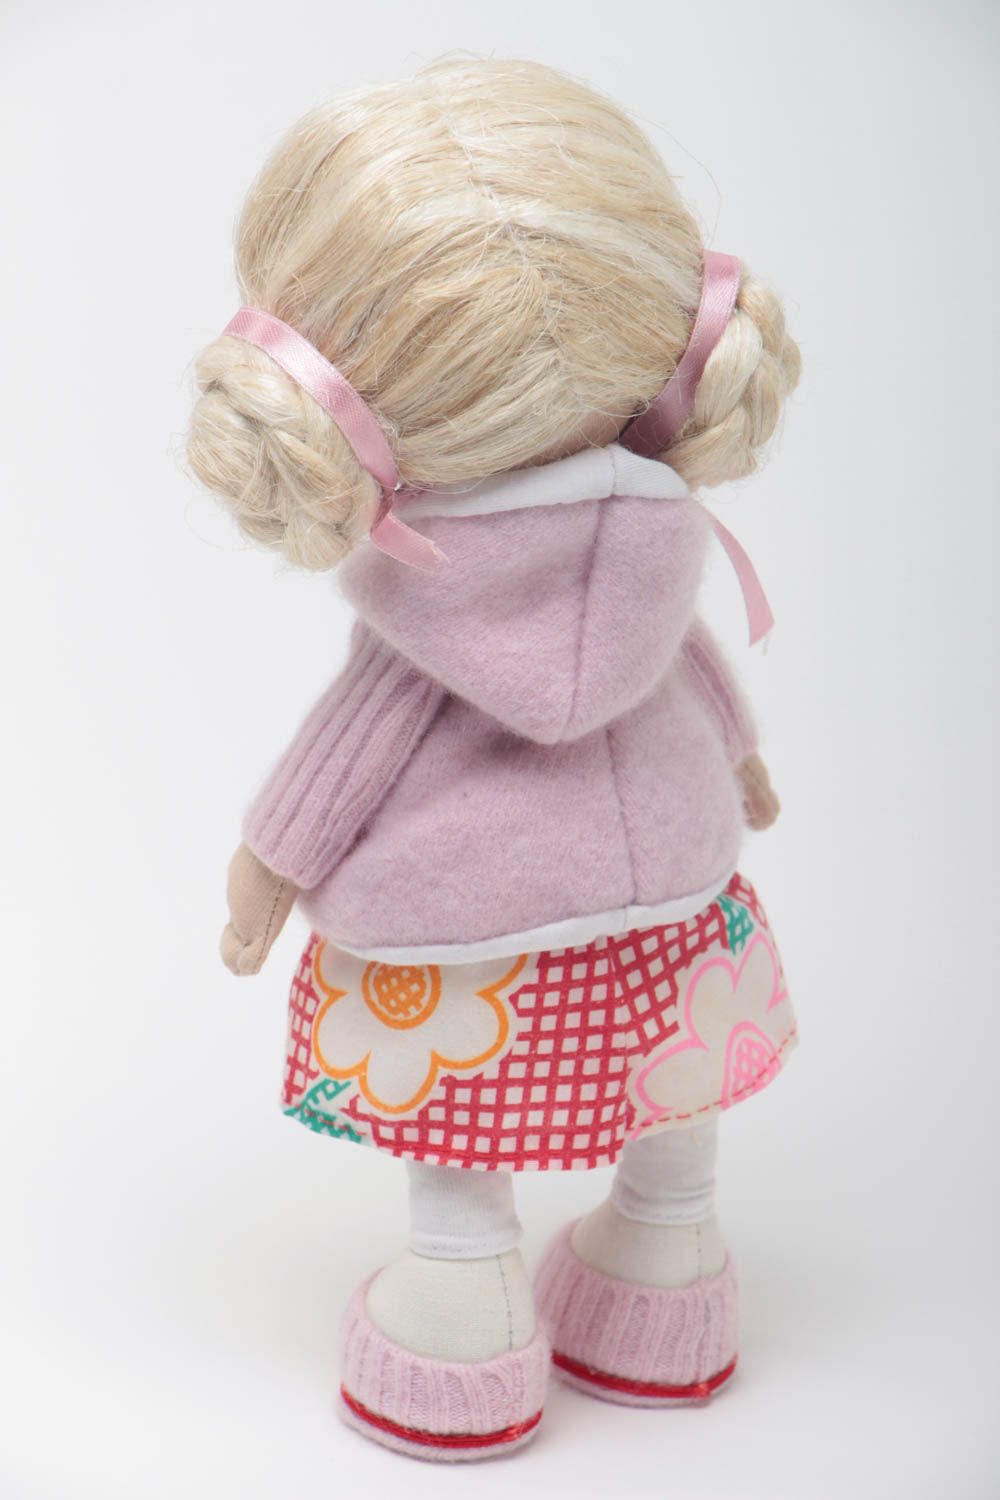 Handmade doll decorative doll nursery decor ideas unusual gift for children photo 4